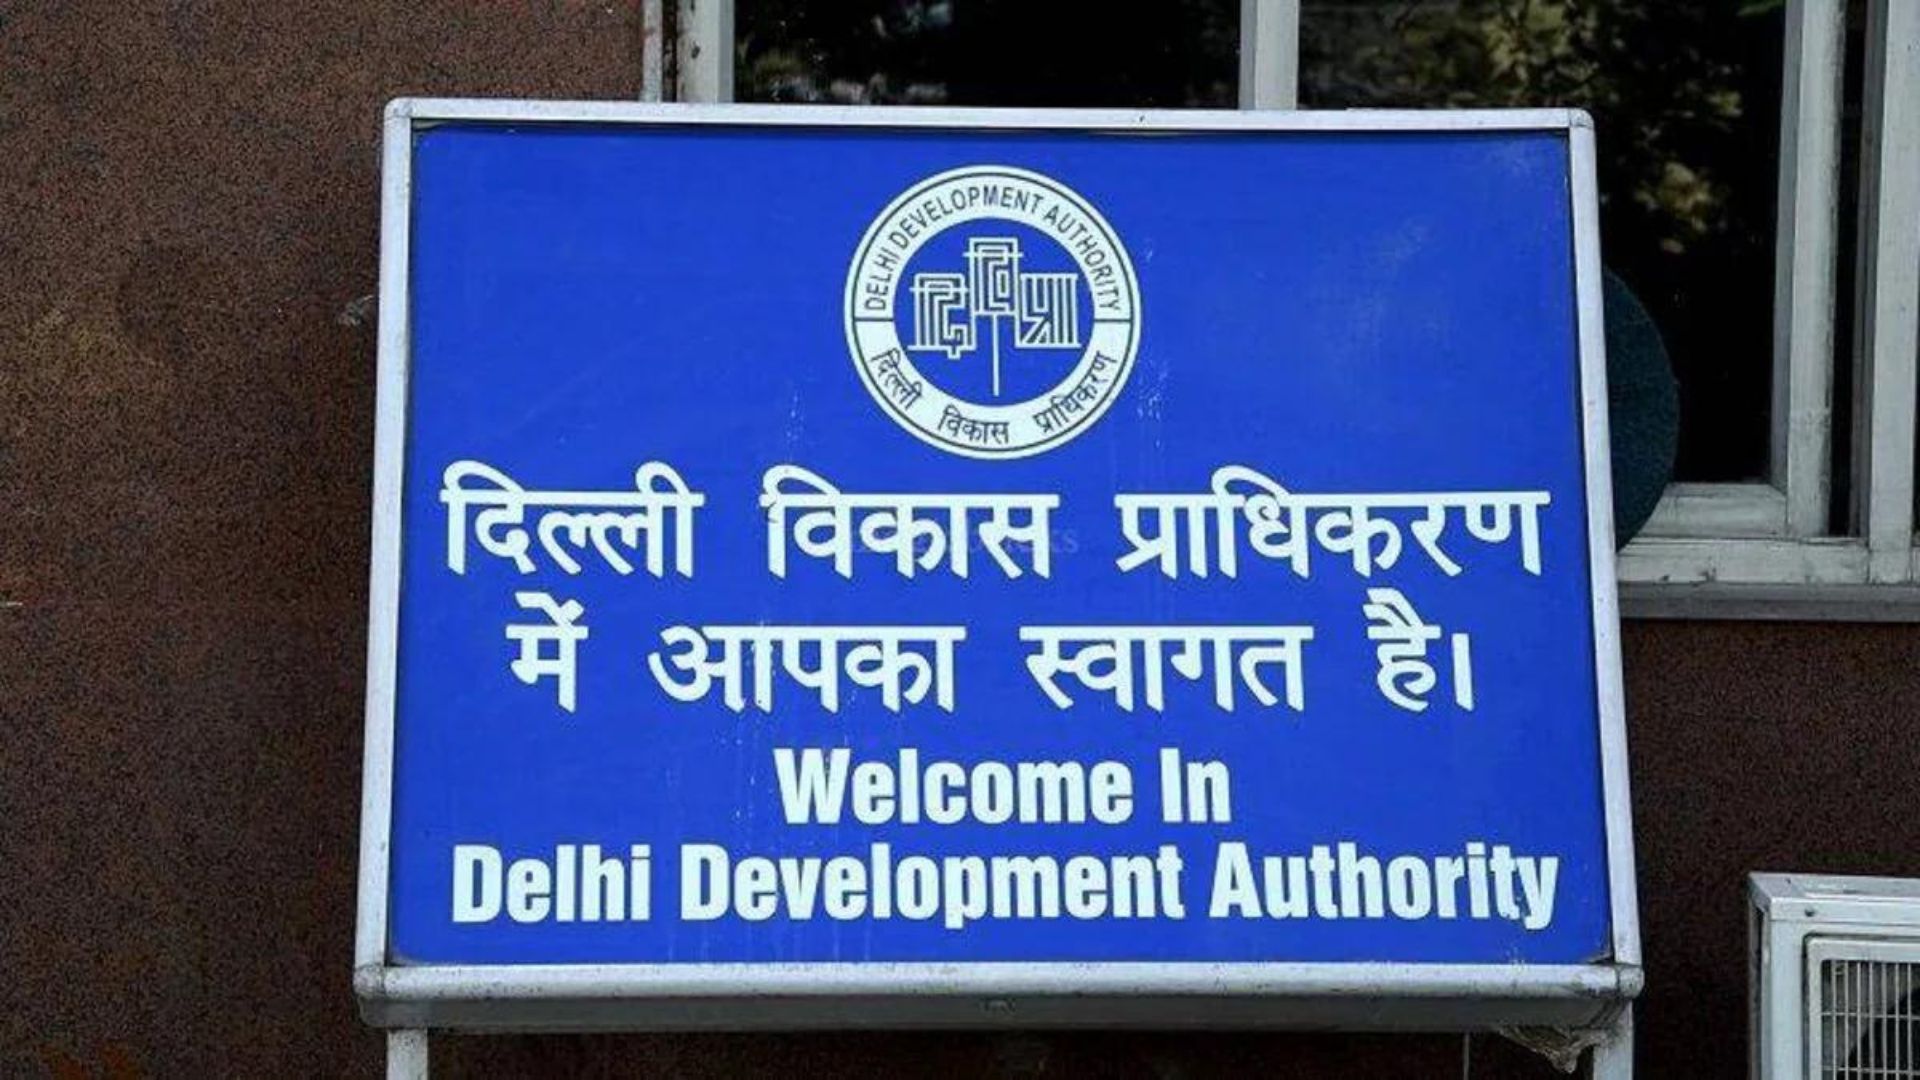 DDA (Delhi Development Authority)